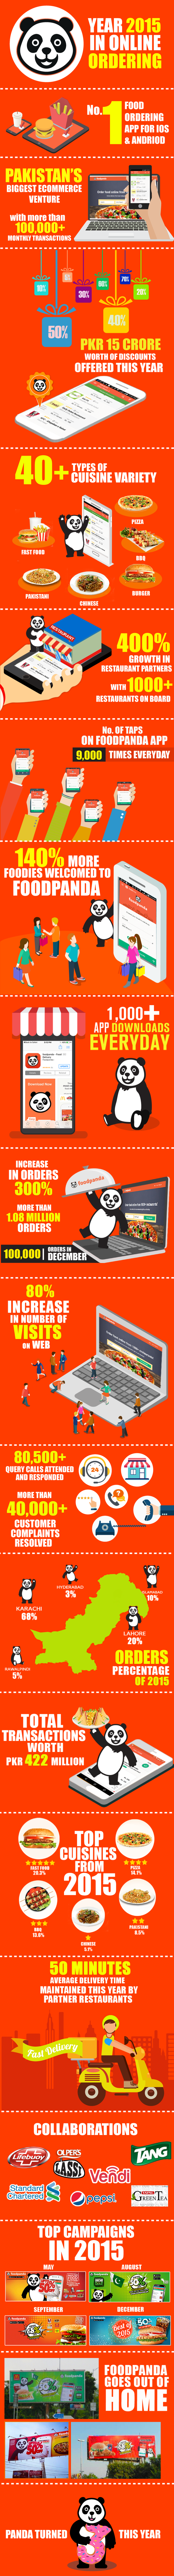 foodpanda Infographic